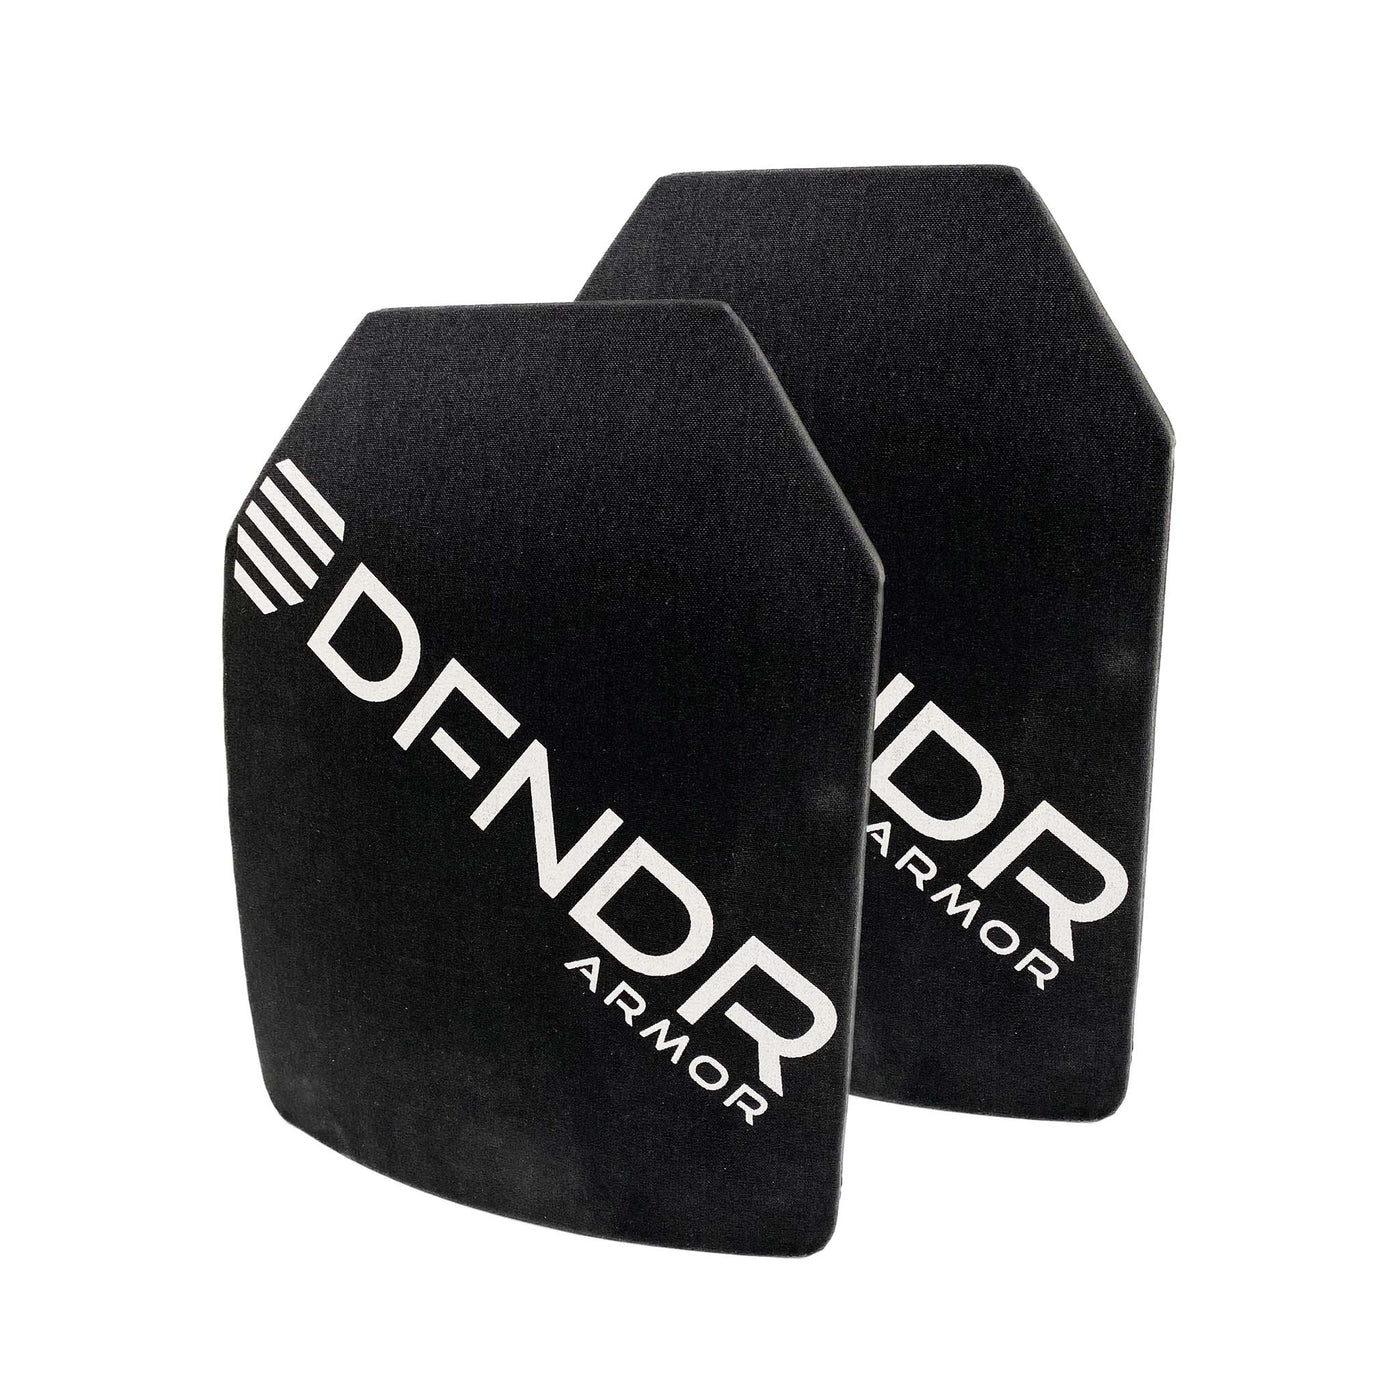 DFNDR Armor Handgun Rated Level IIIA Stand-Alone Hard Plates